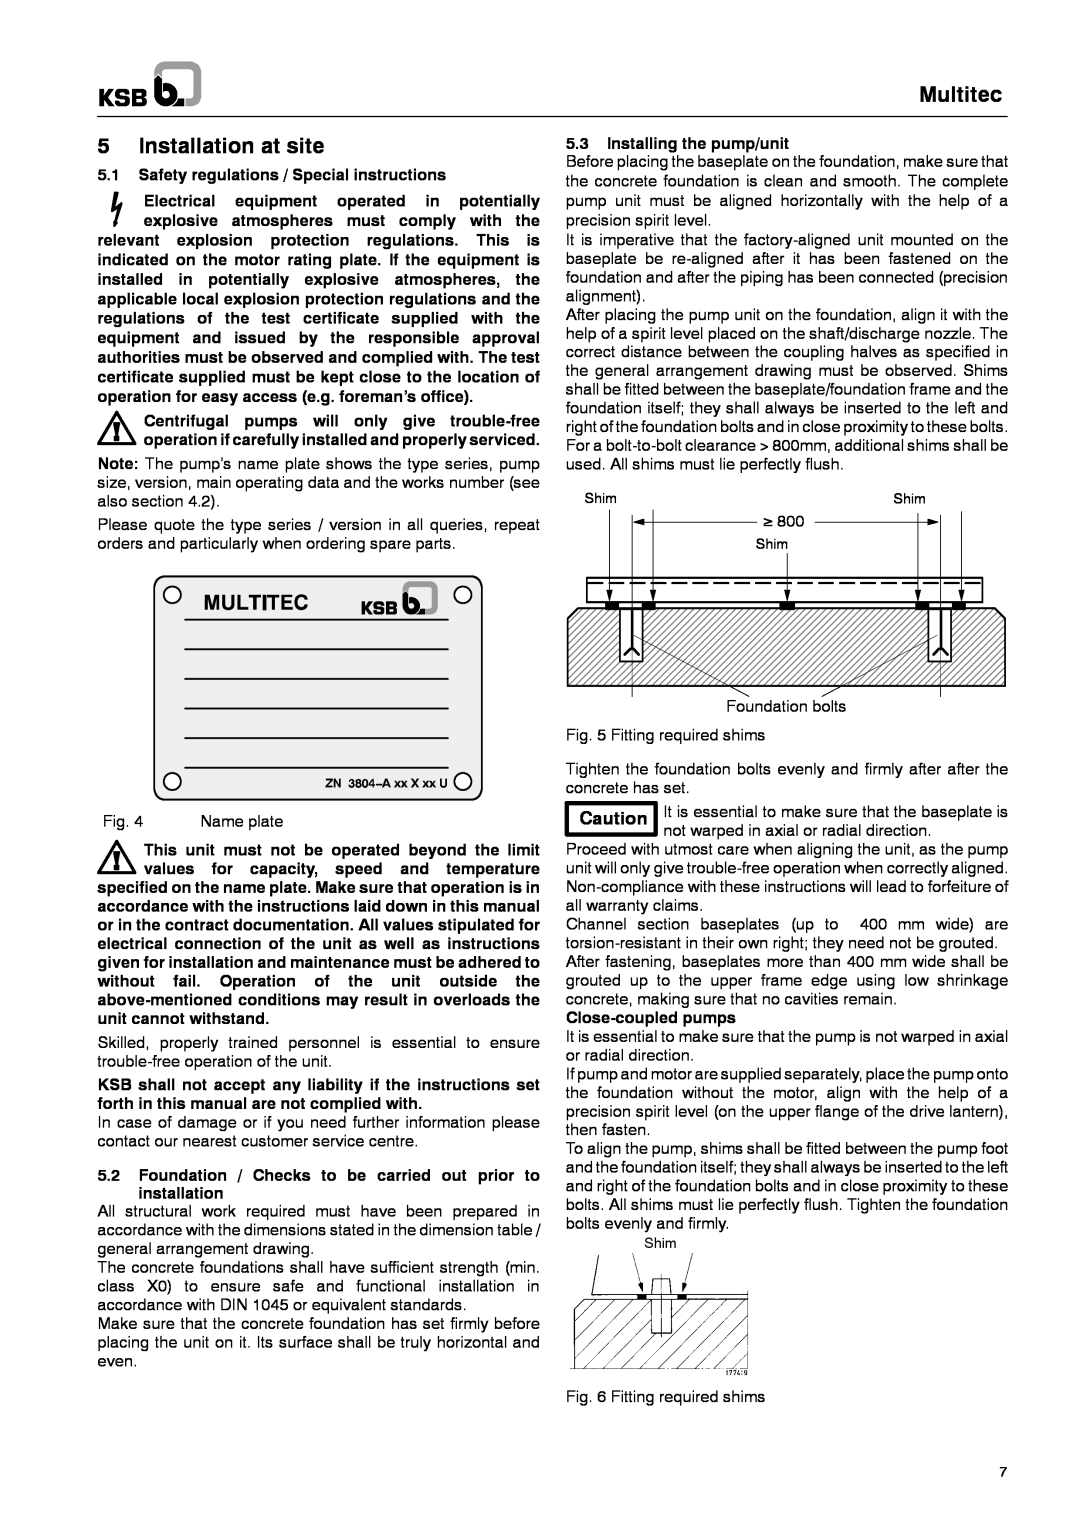 Multitech 1777.8/7-10 G3 operating instructions 5Installation at site, Multitec 